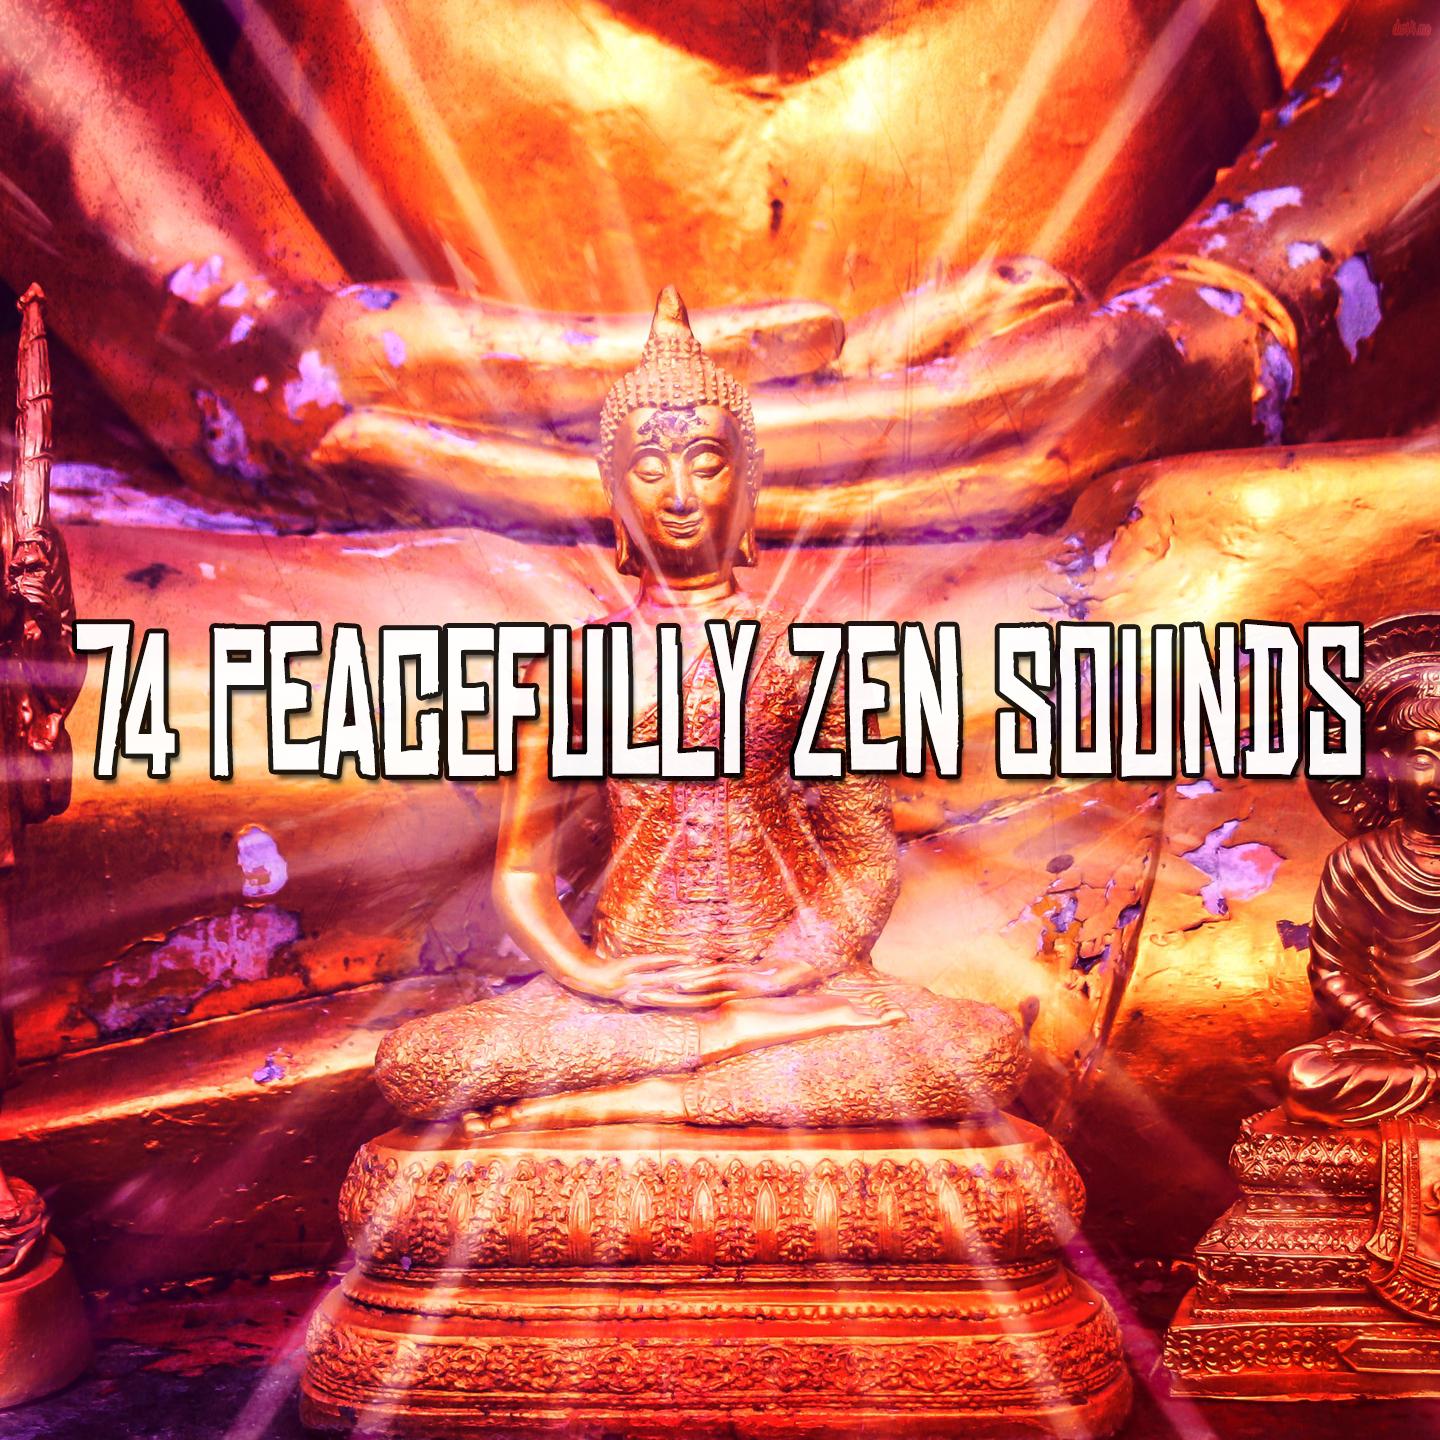 74 Peacefully Zen Sounds